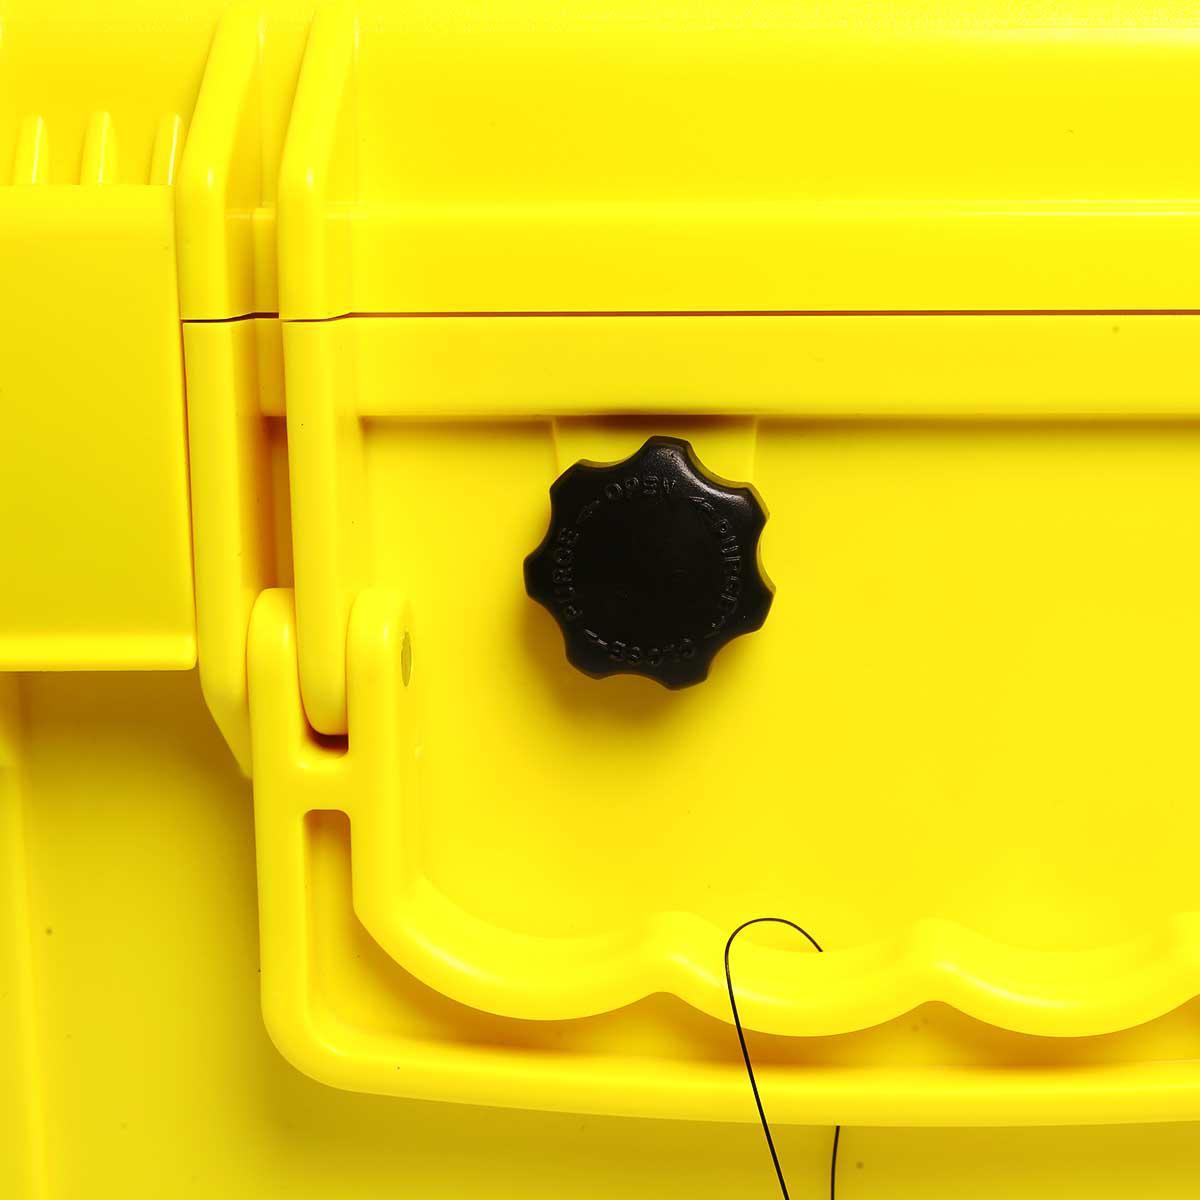 J6500-2 Case Yellow Accessories